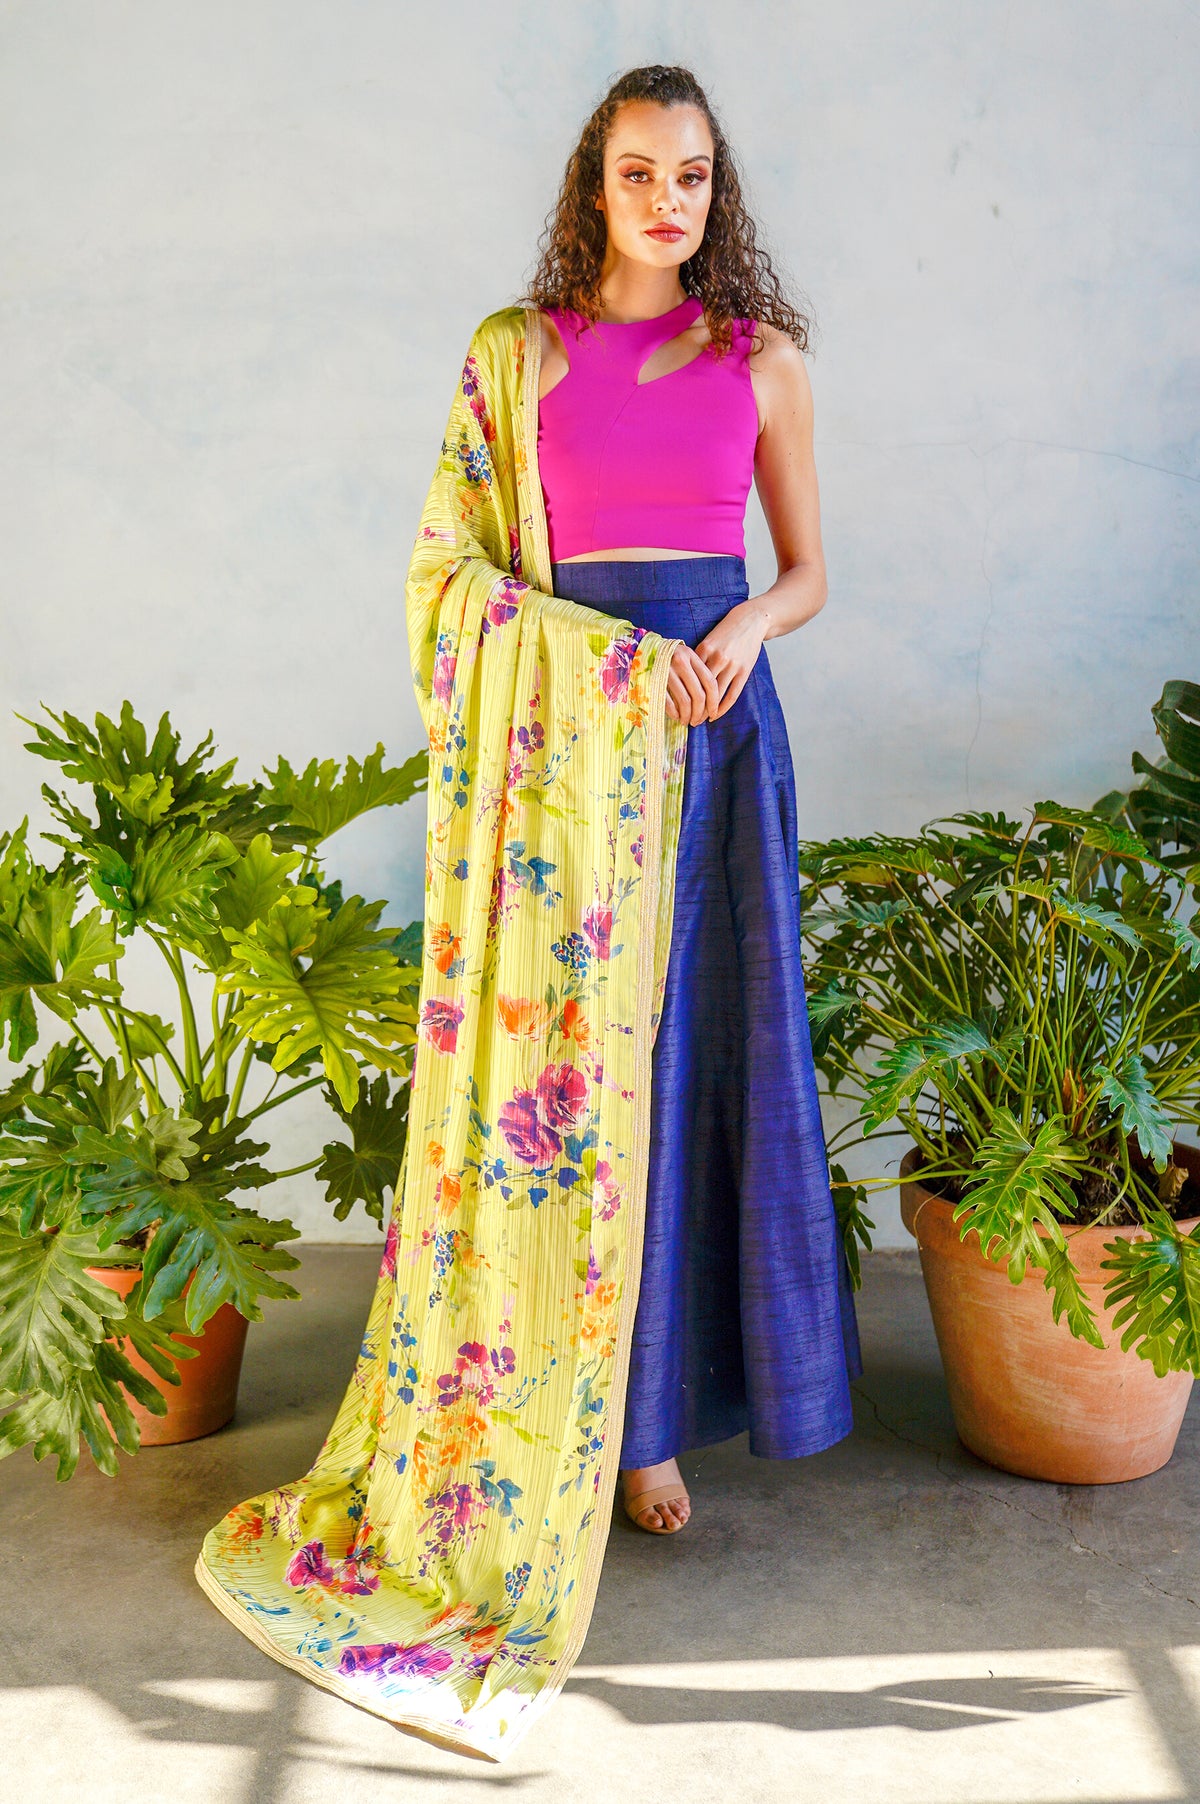 PATAKA Floral Dupatta - Front View - Harleen Kaur - Modern Indian Womenswear